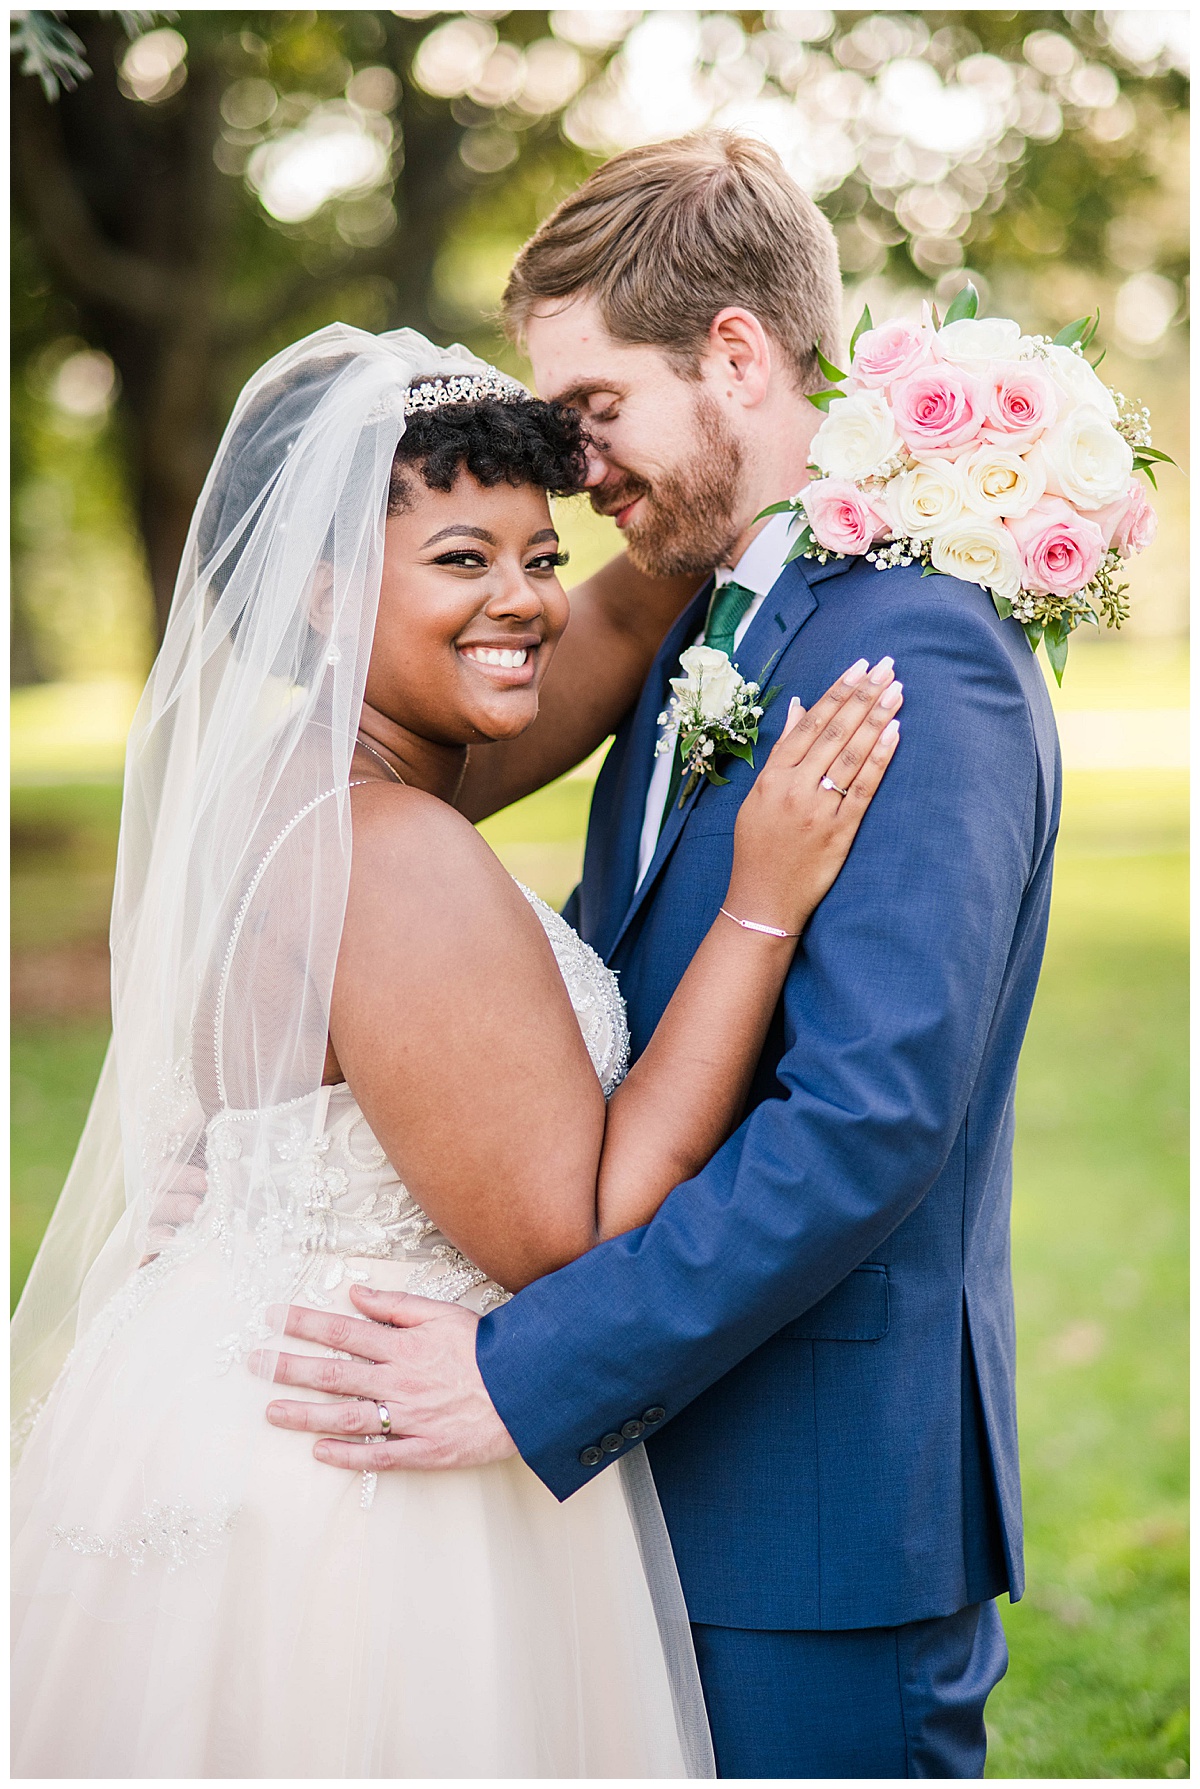 University of Lynchburg Wedding: snidow chapel, bride and groom, smiling, pink and white wedding flowers, blush wedding dress, tiara